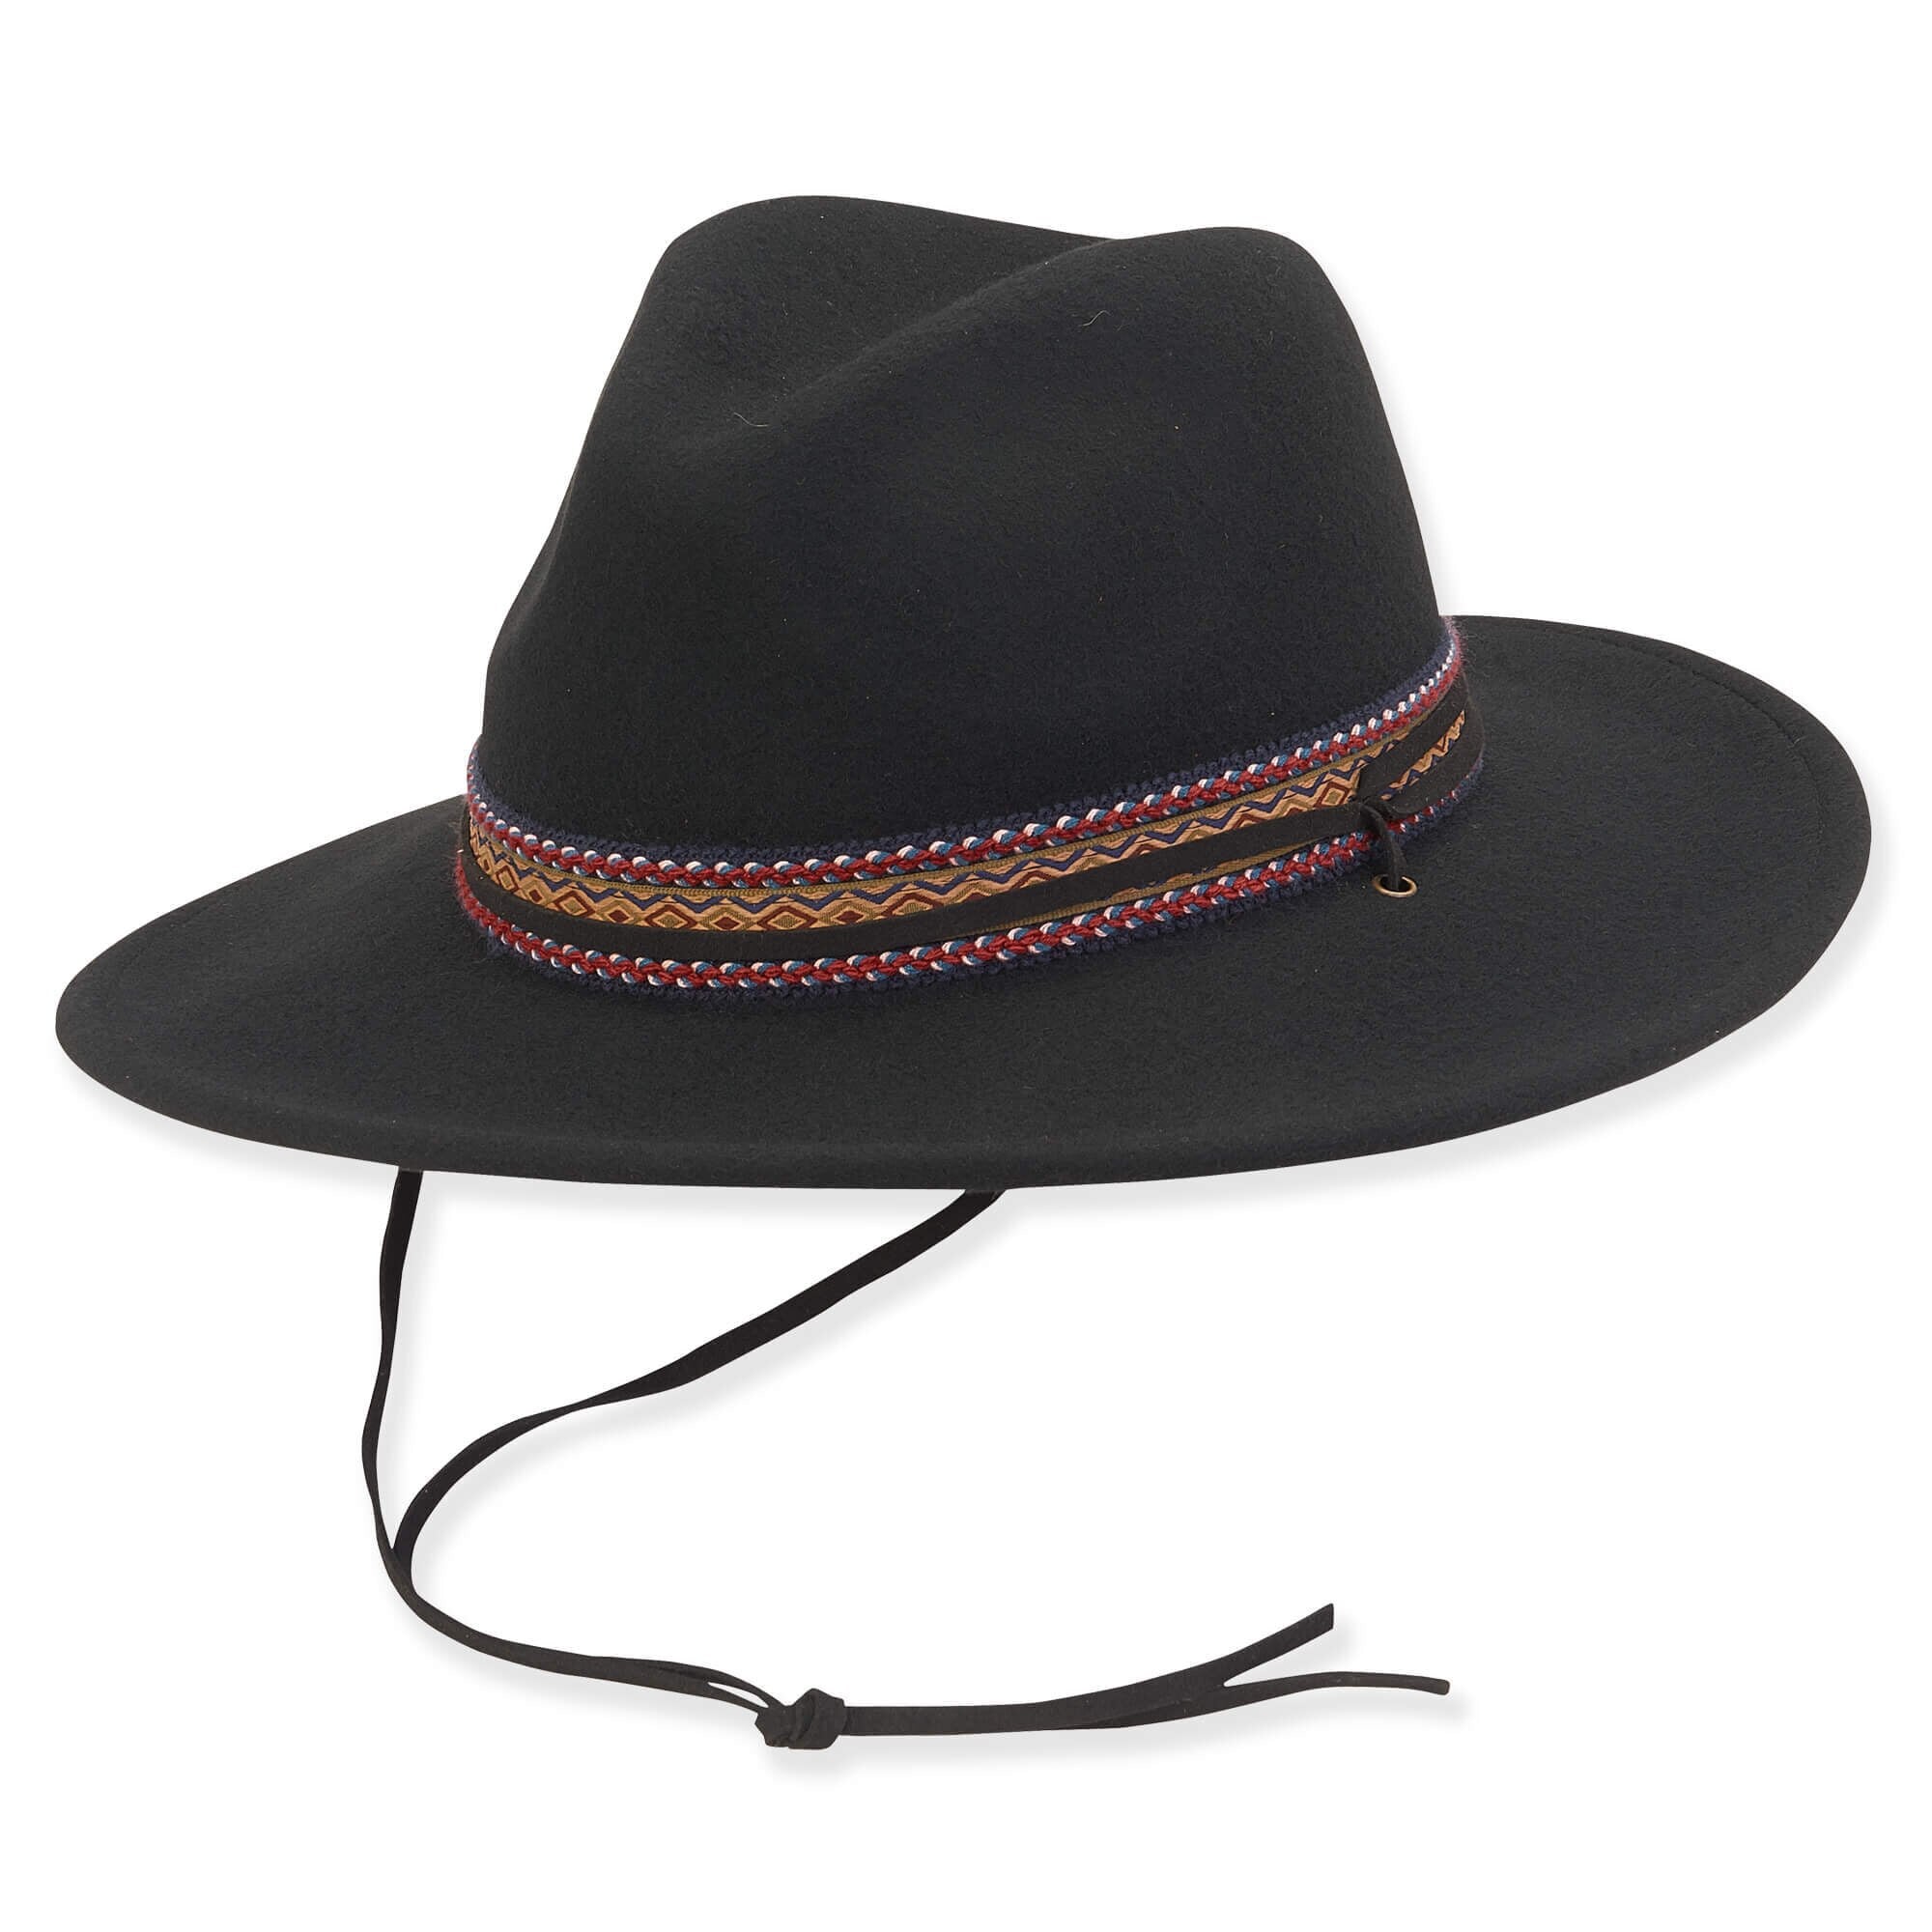 Wool Felt Safari Hat with Suede Chin Strap - Adora® Hats Safari Hat Adora Hats AD1134A Black Medium (57 cm) 